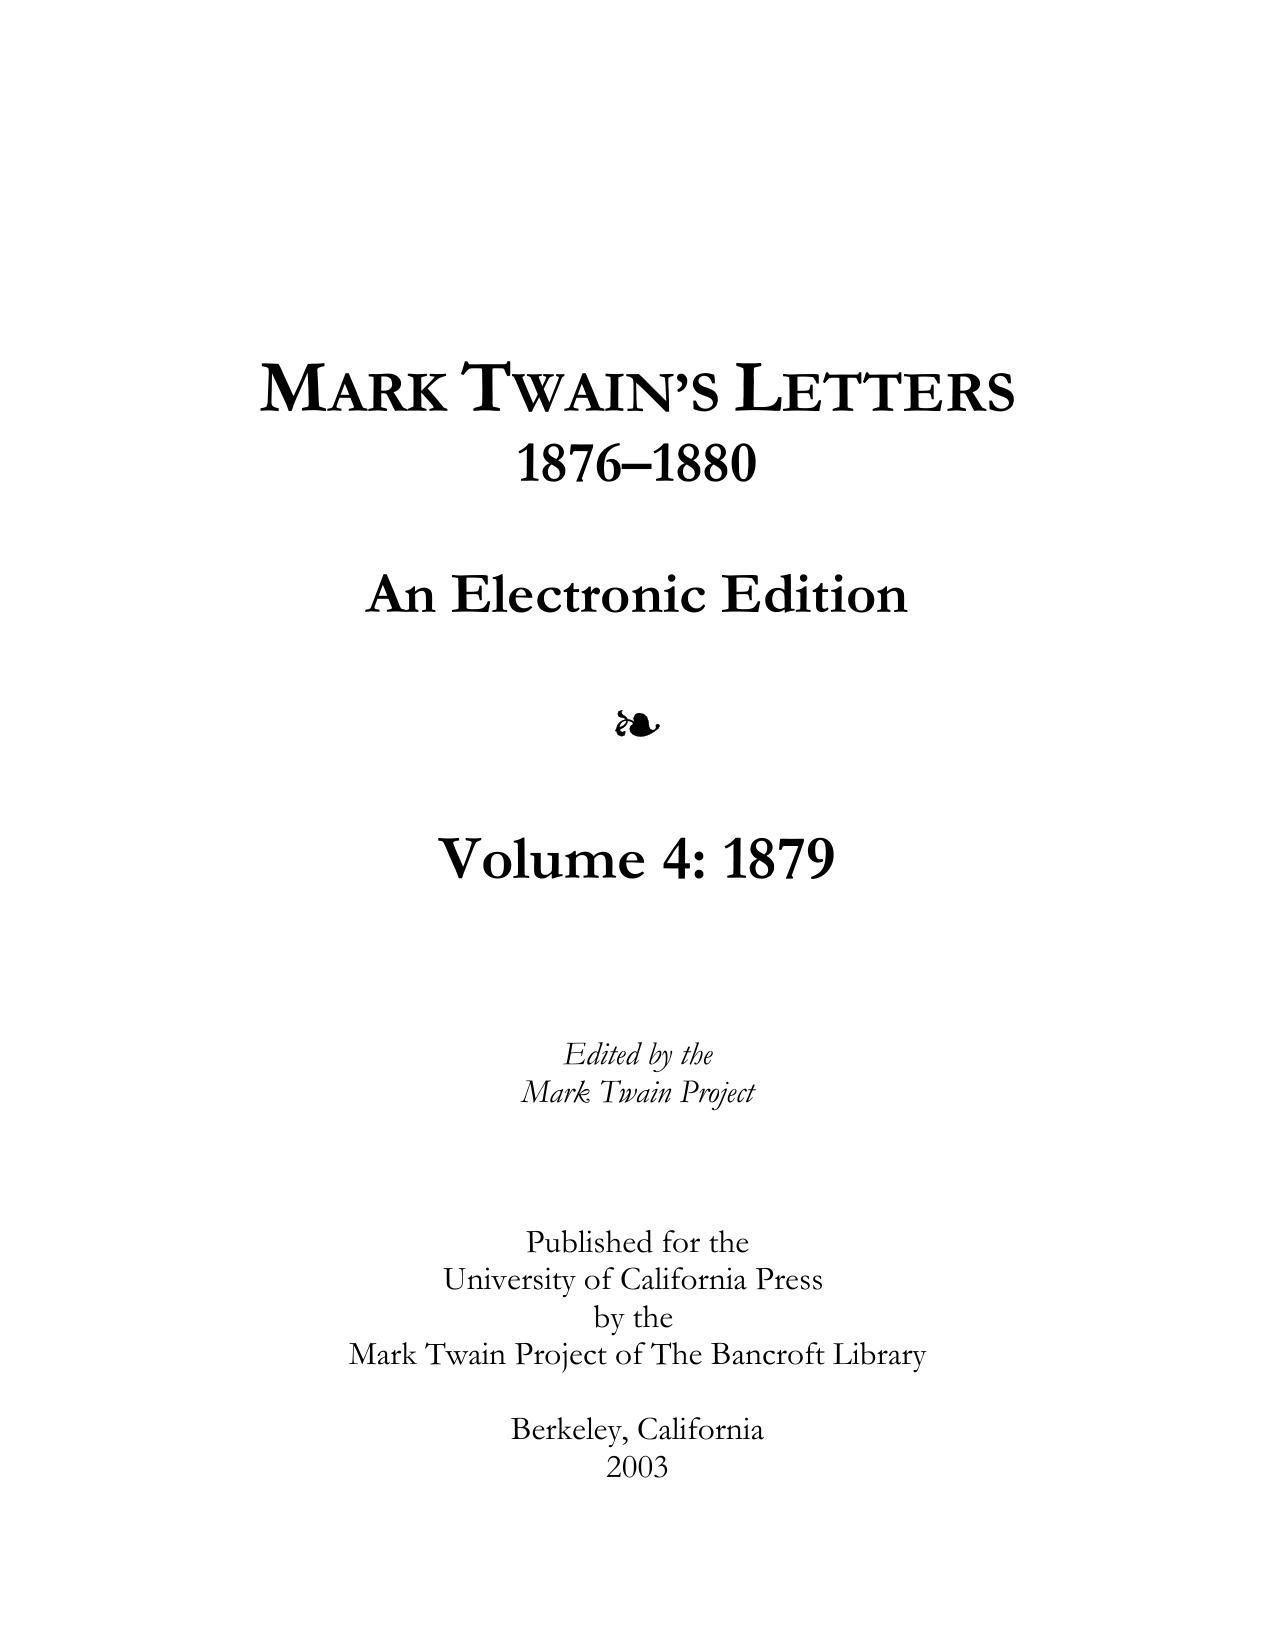 Mark Twain's Letters, 1876-1880, An Electronic Edition, Volume 4: 1879, © 2001 The Mark Twain Foundation